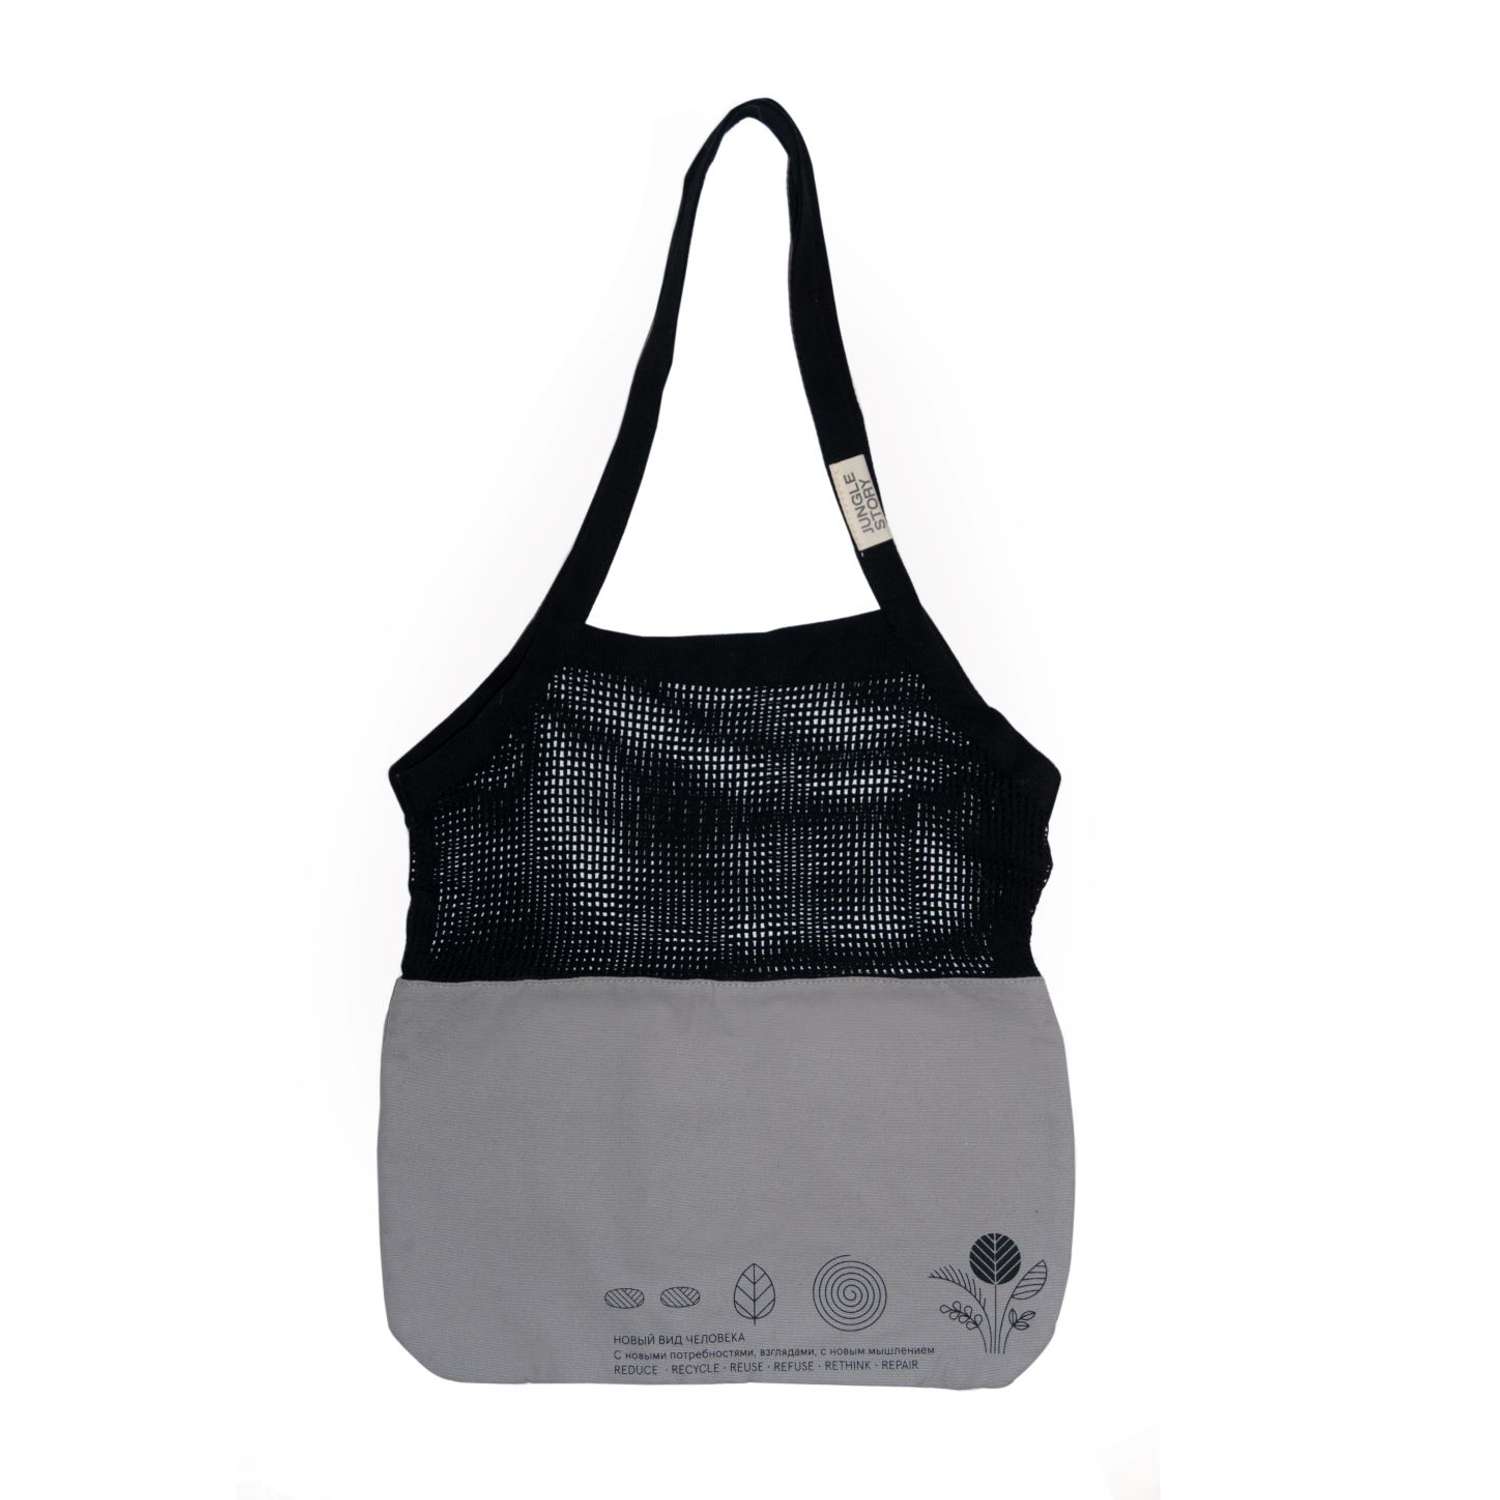 Комбинированная сумка авоська Jungle Story градиент Black - Grey - фото 1